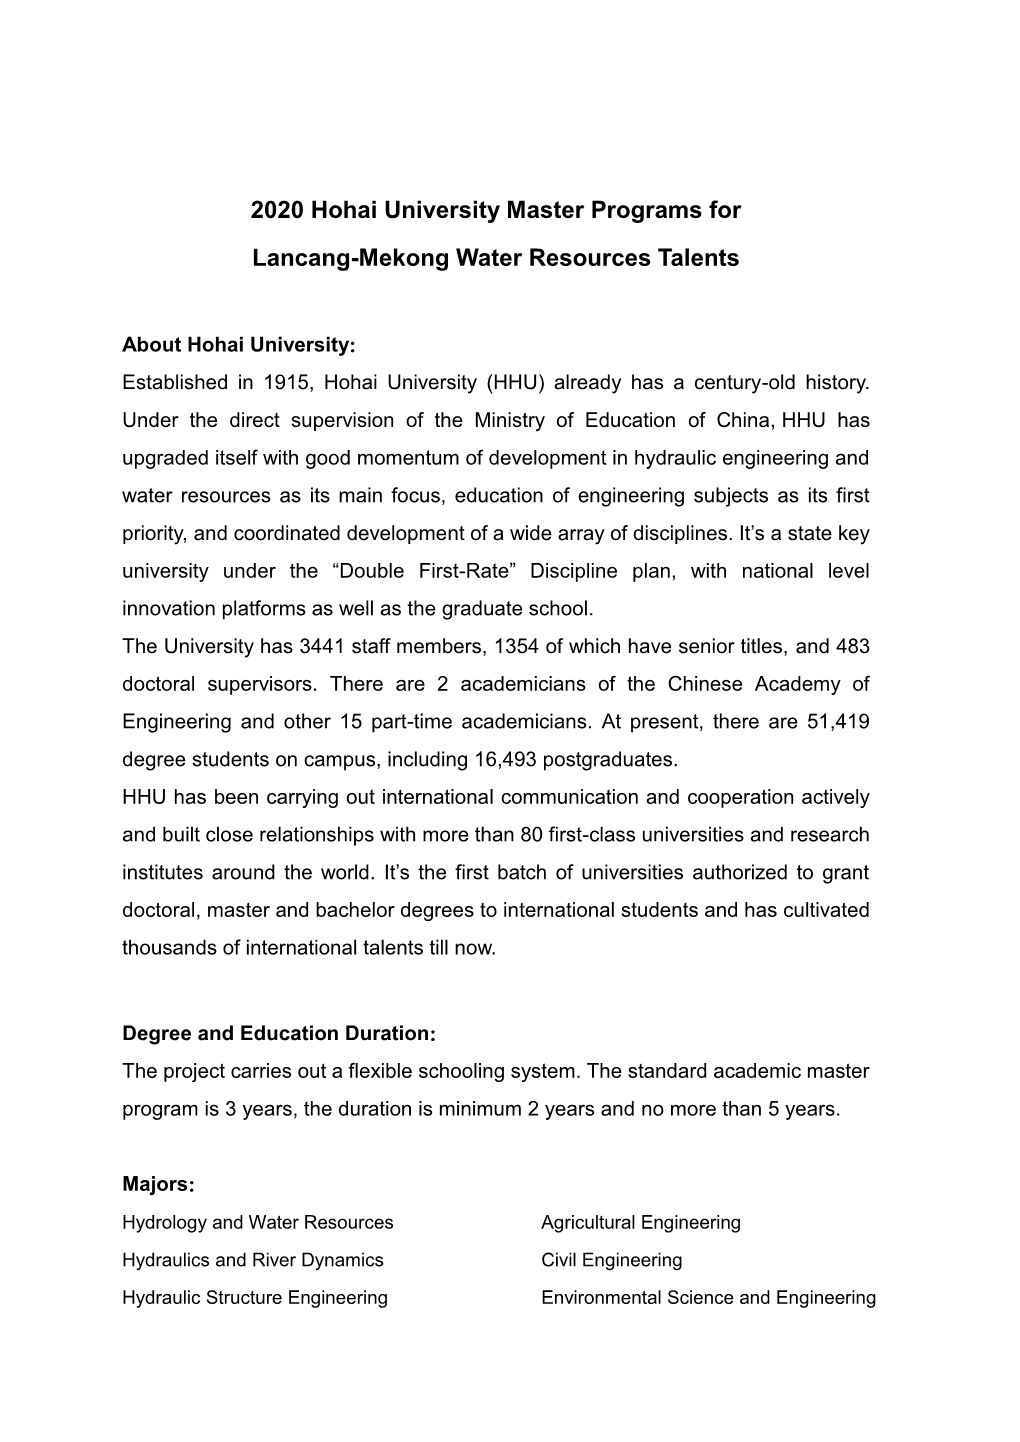 2020 Hohai University Master Programs for Lancang-Mekong Water Resources Talents